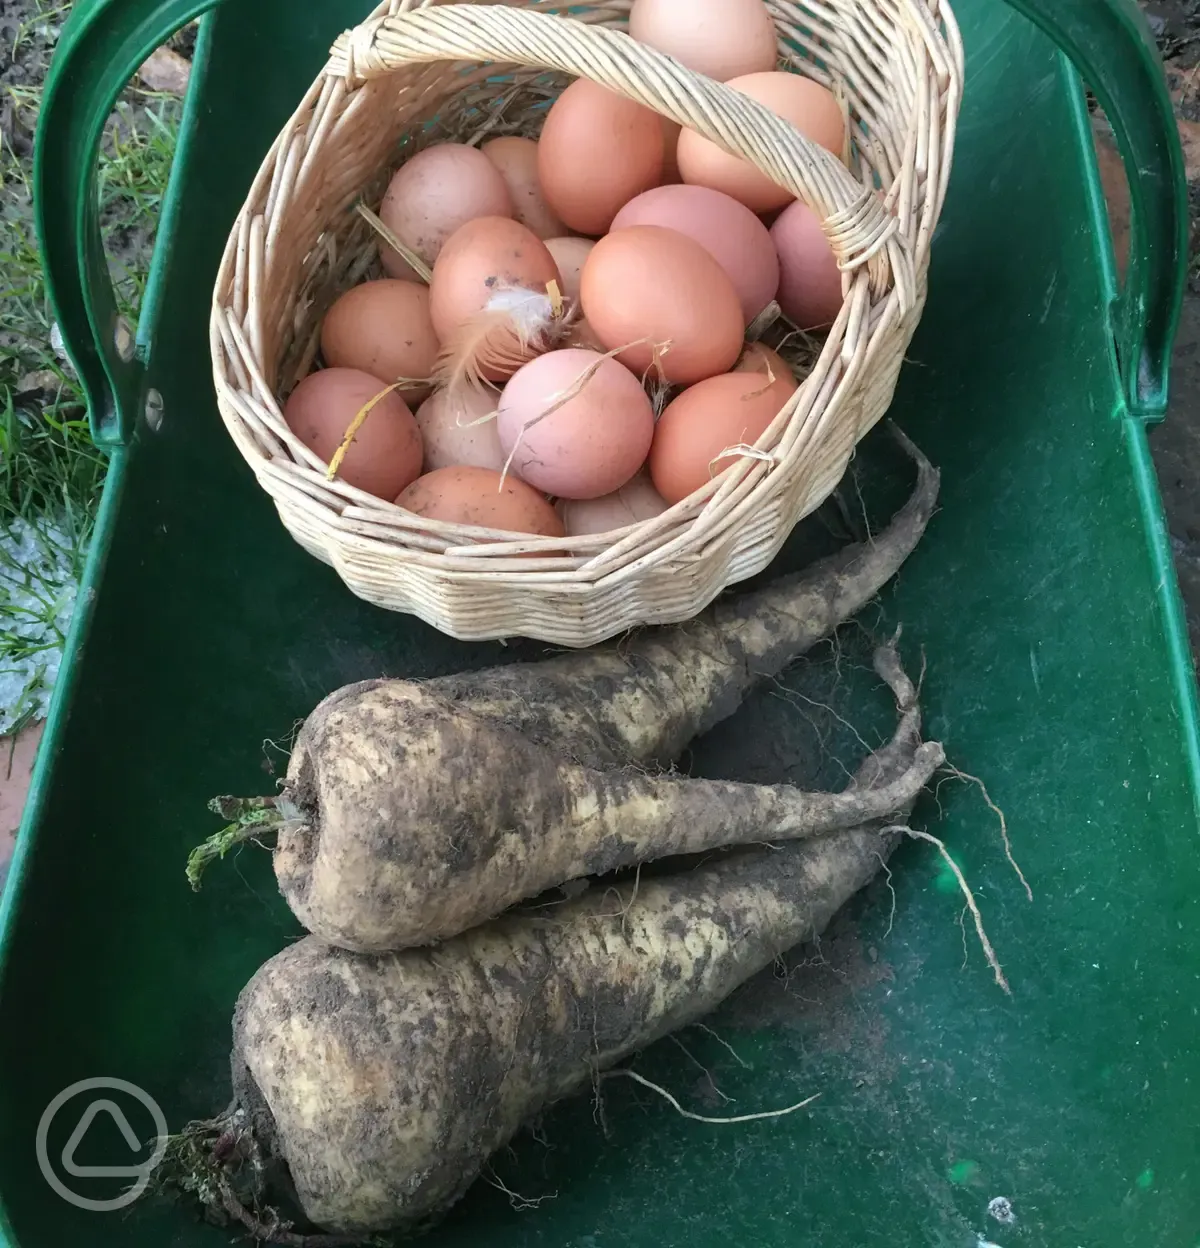 Marton Farm eggs and produce